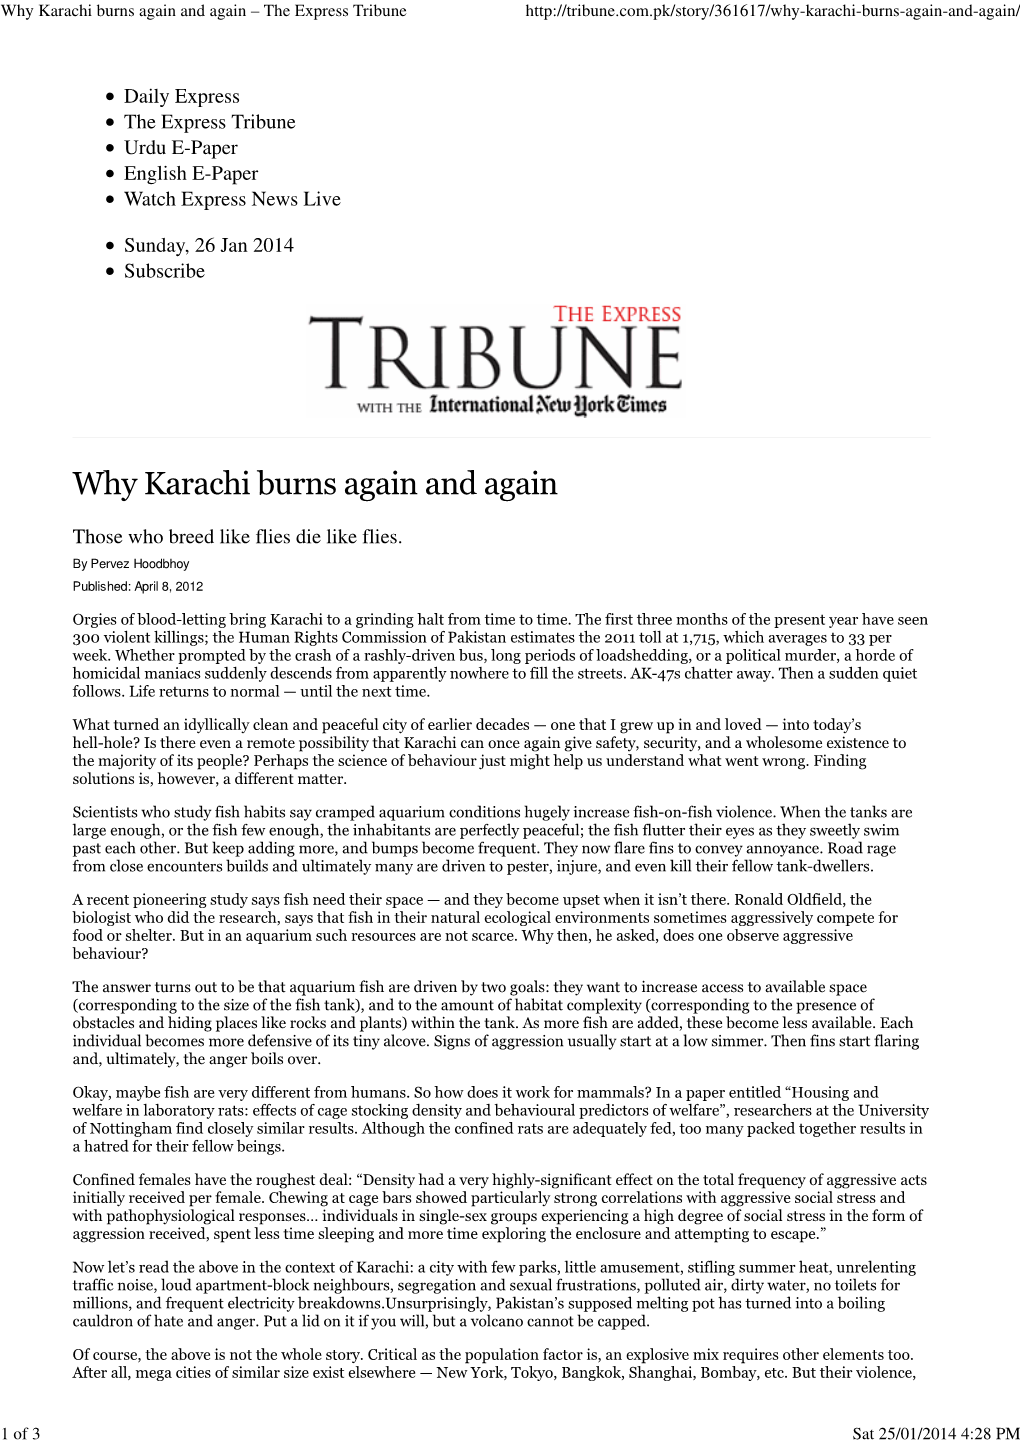 Why Karachi Burns Again and Again \226 the Express Tribune